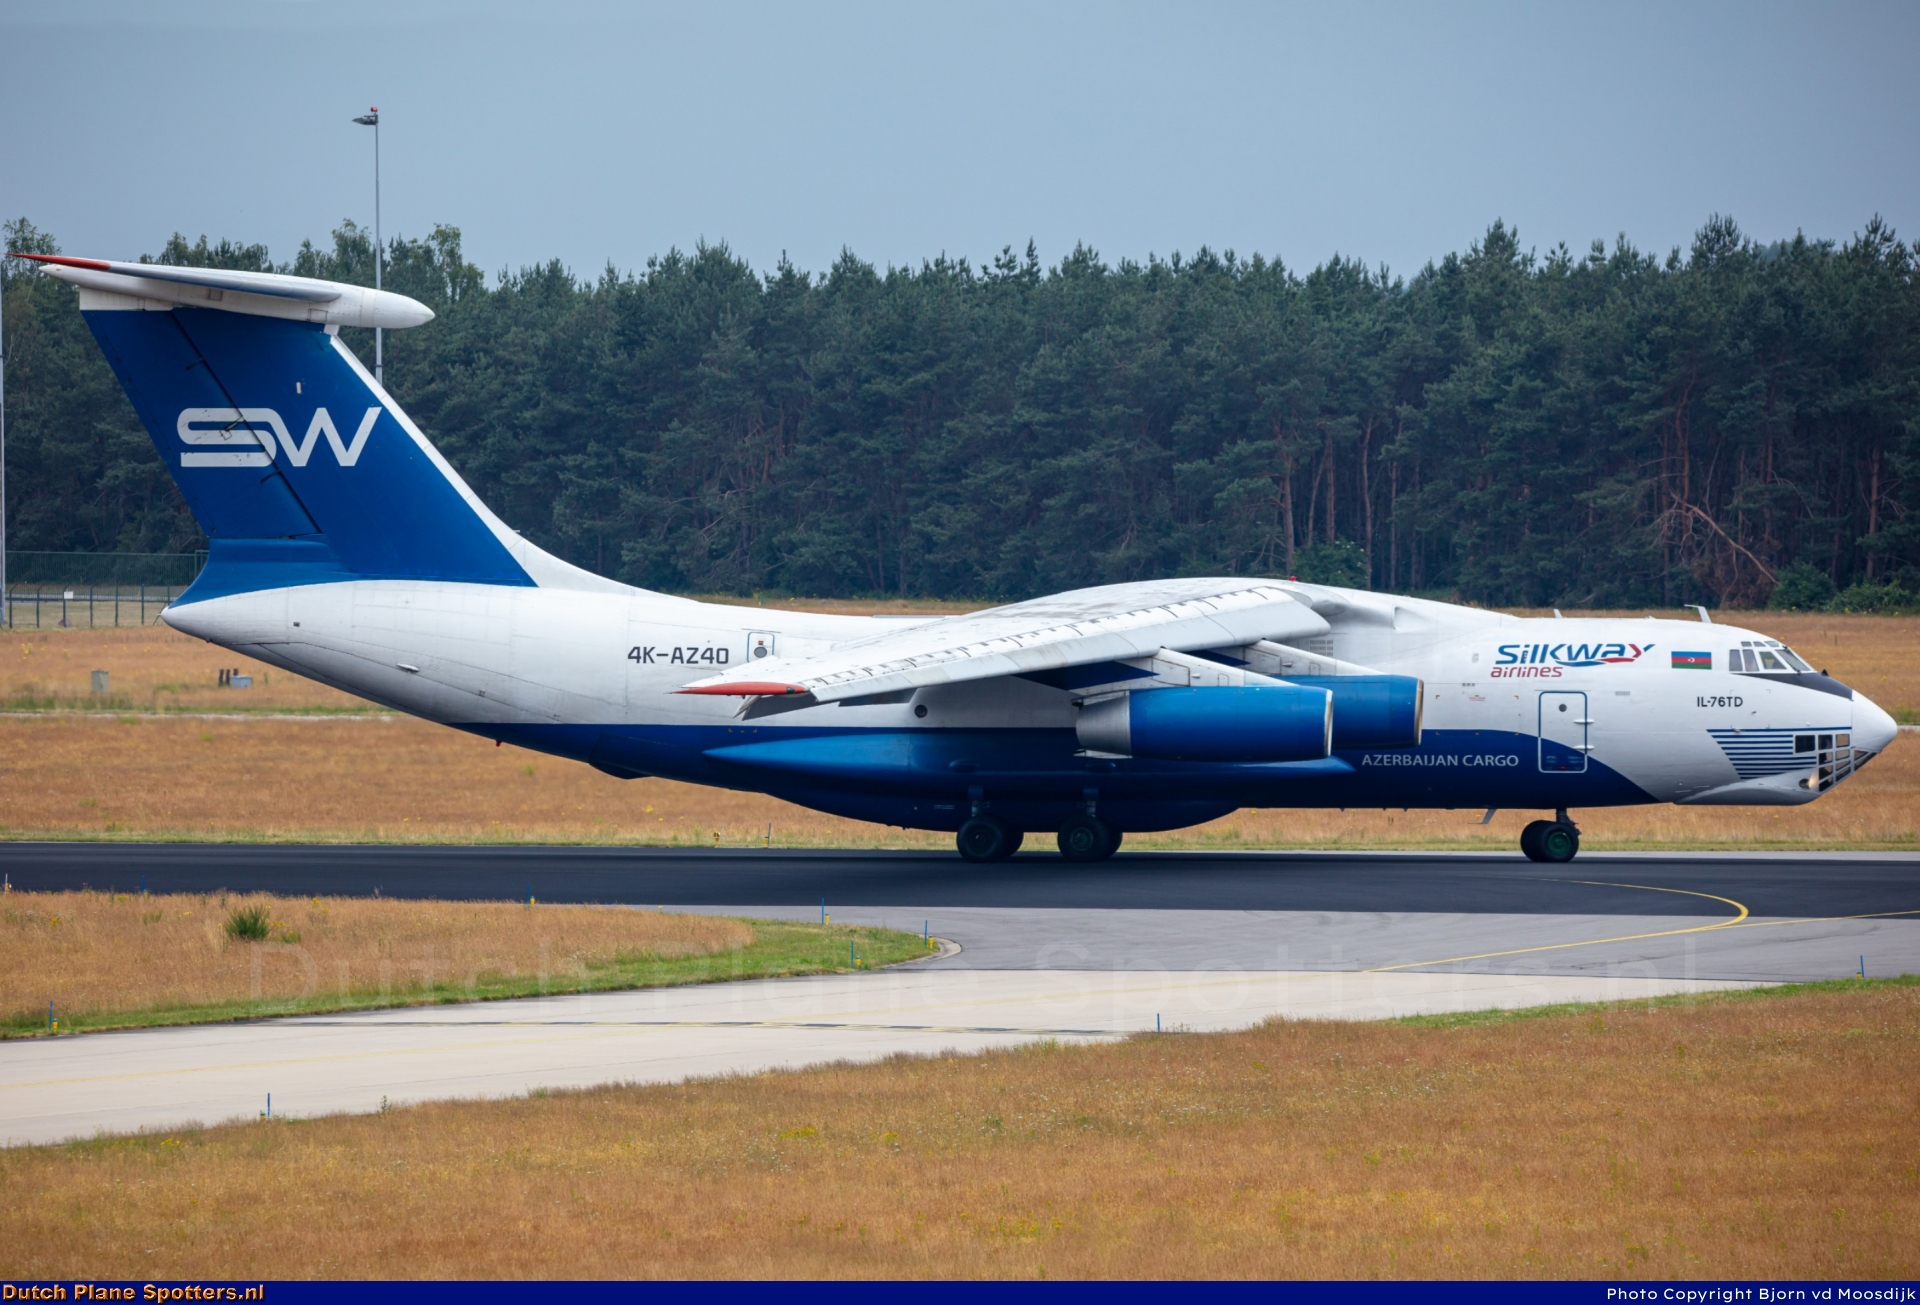 4K-AZ40 Ilyushin Il-76 Silk Way Airlines by Bjorn van de Moosdijk